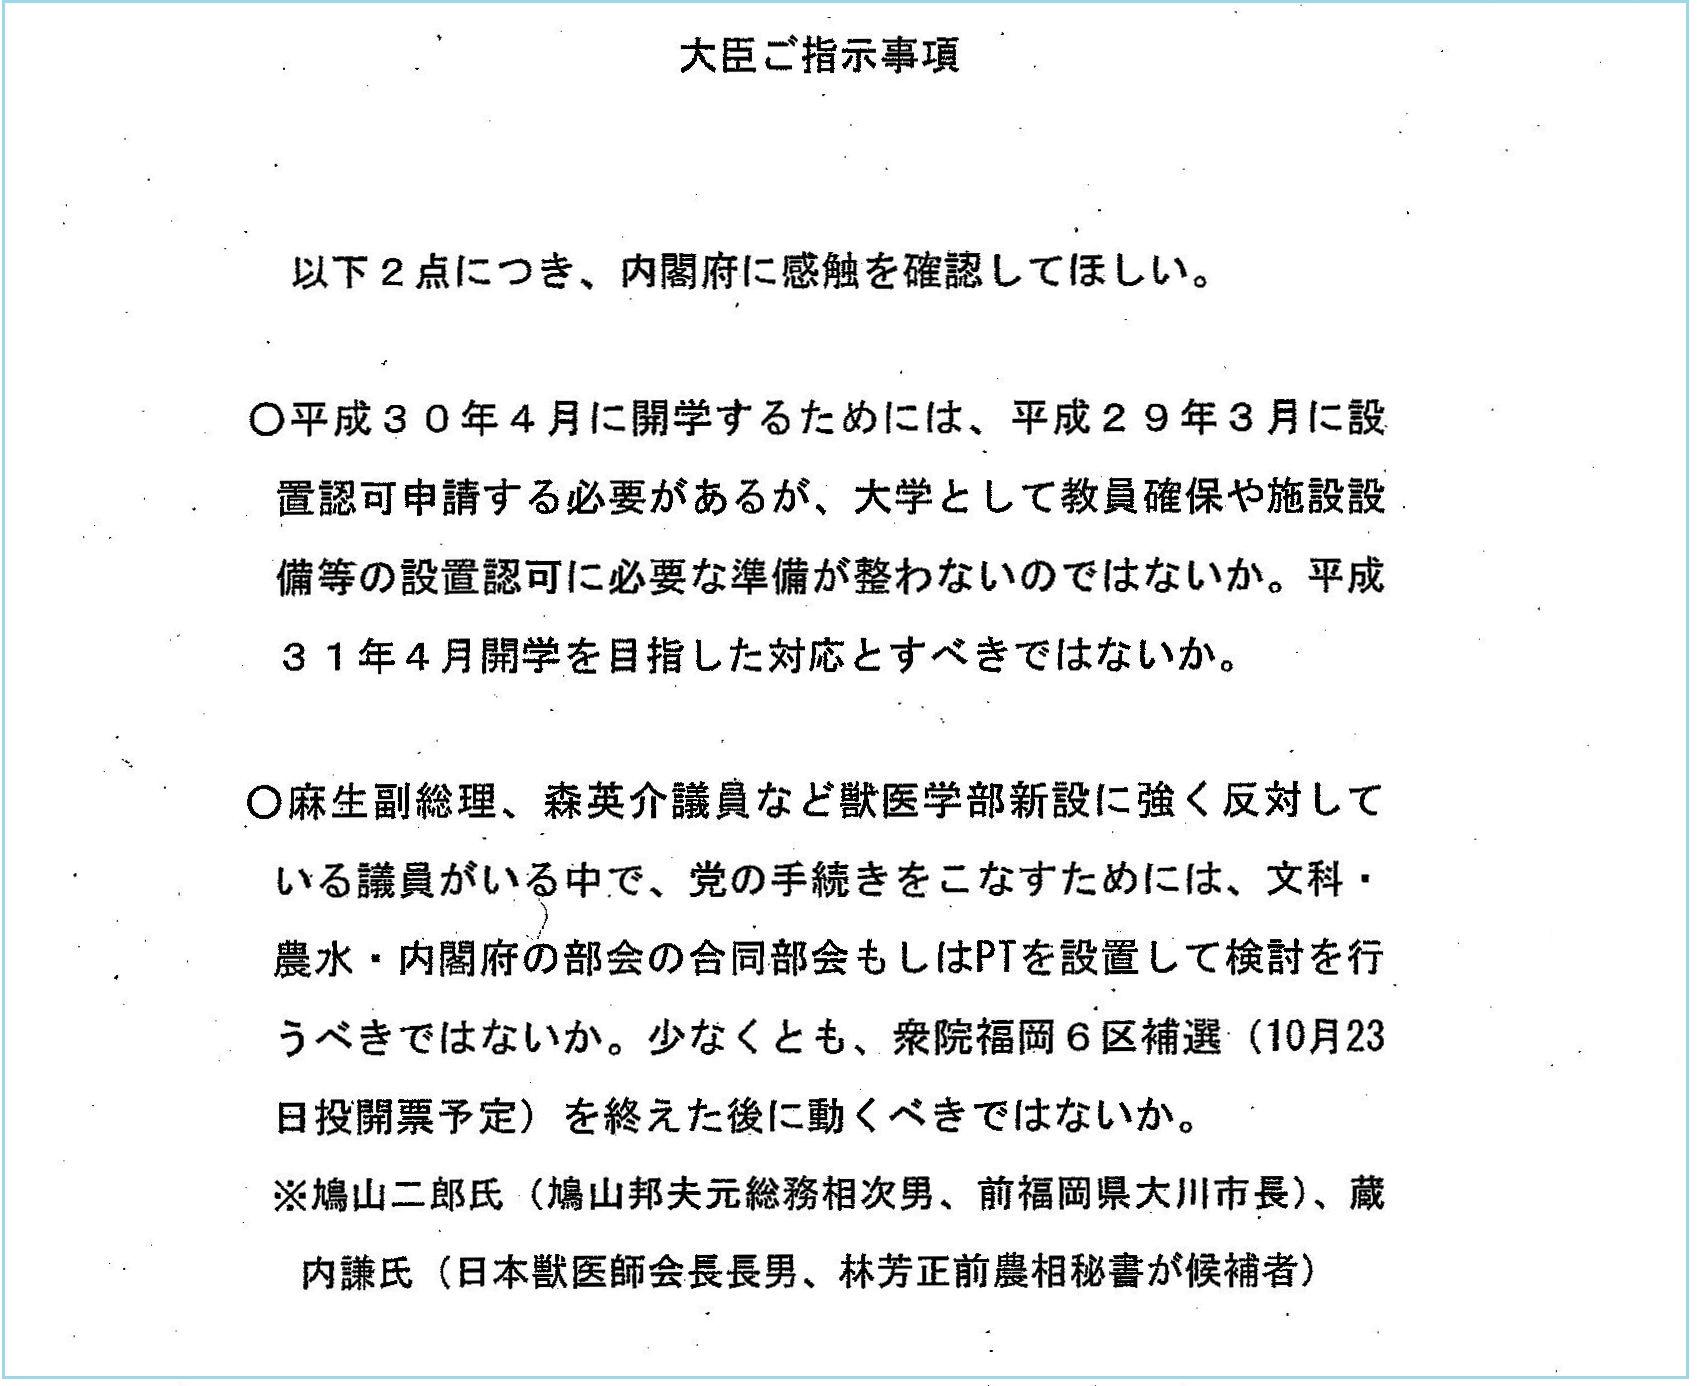 http://hunter-investigate.jp/news/fbc76e3ded0f16c3646b2789d668e8d0f06403cc.jpg